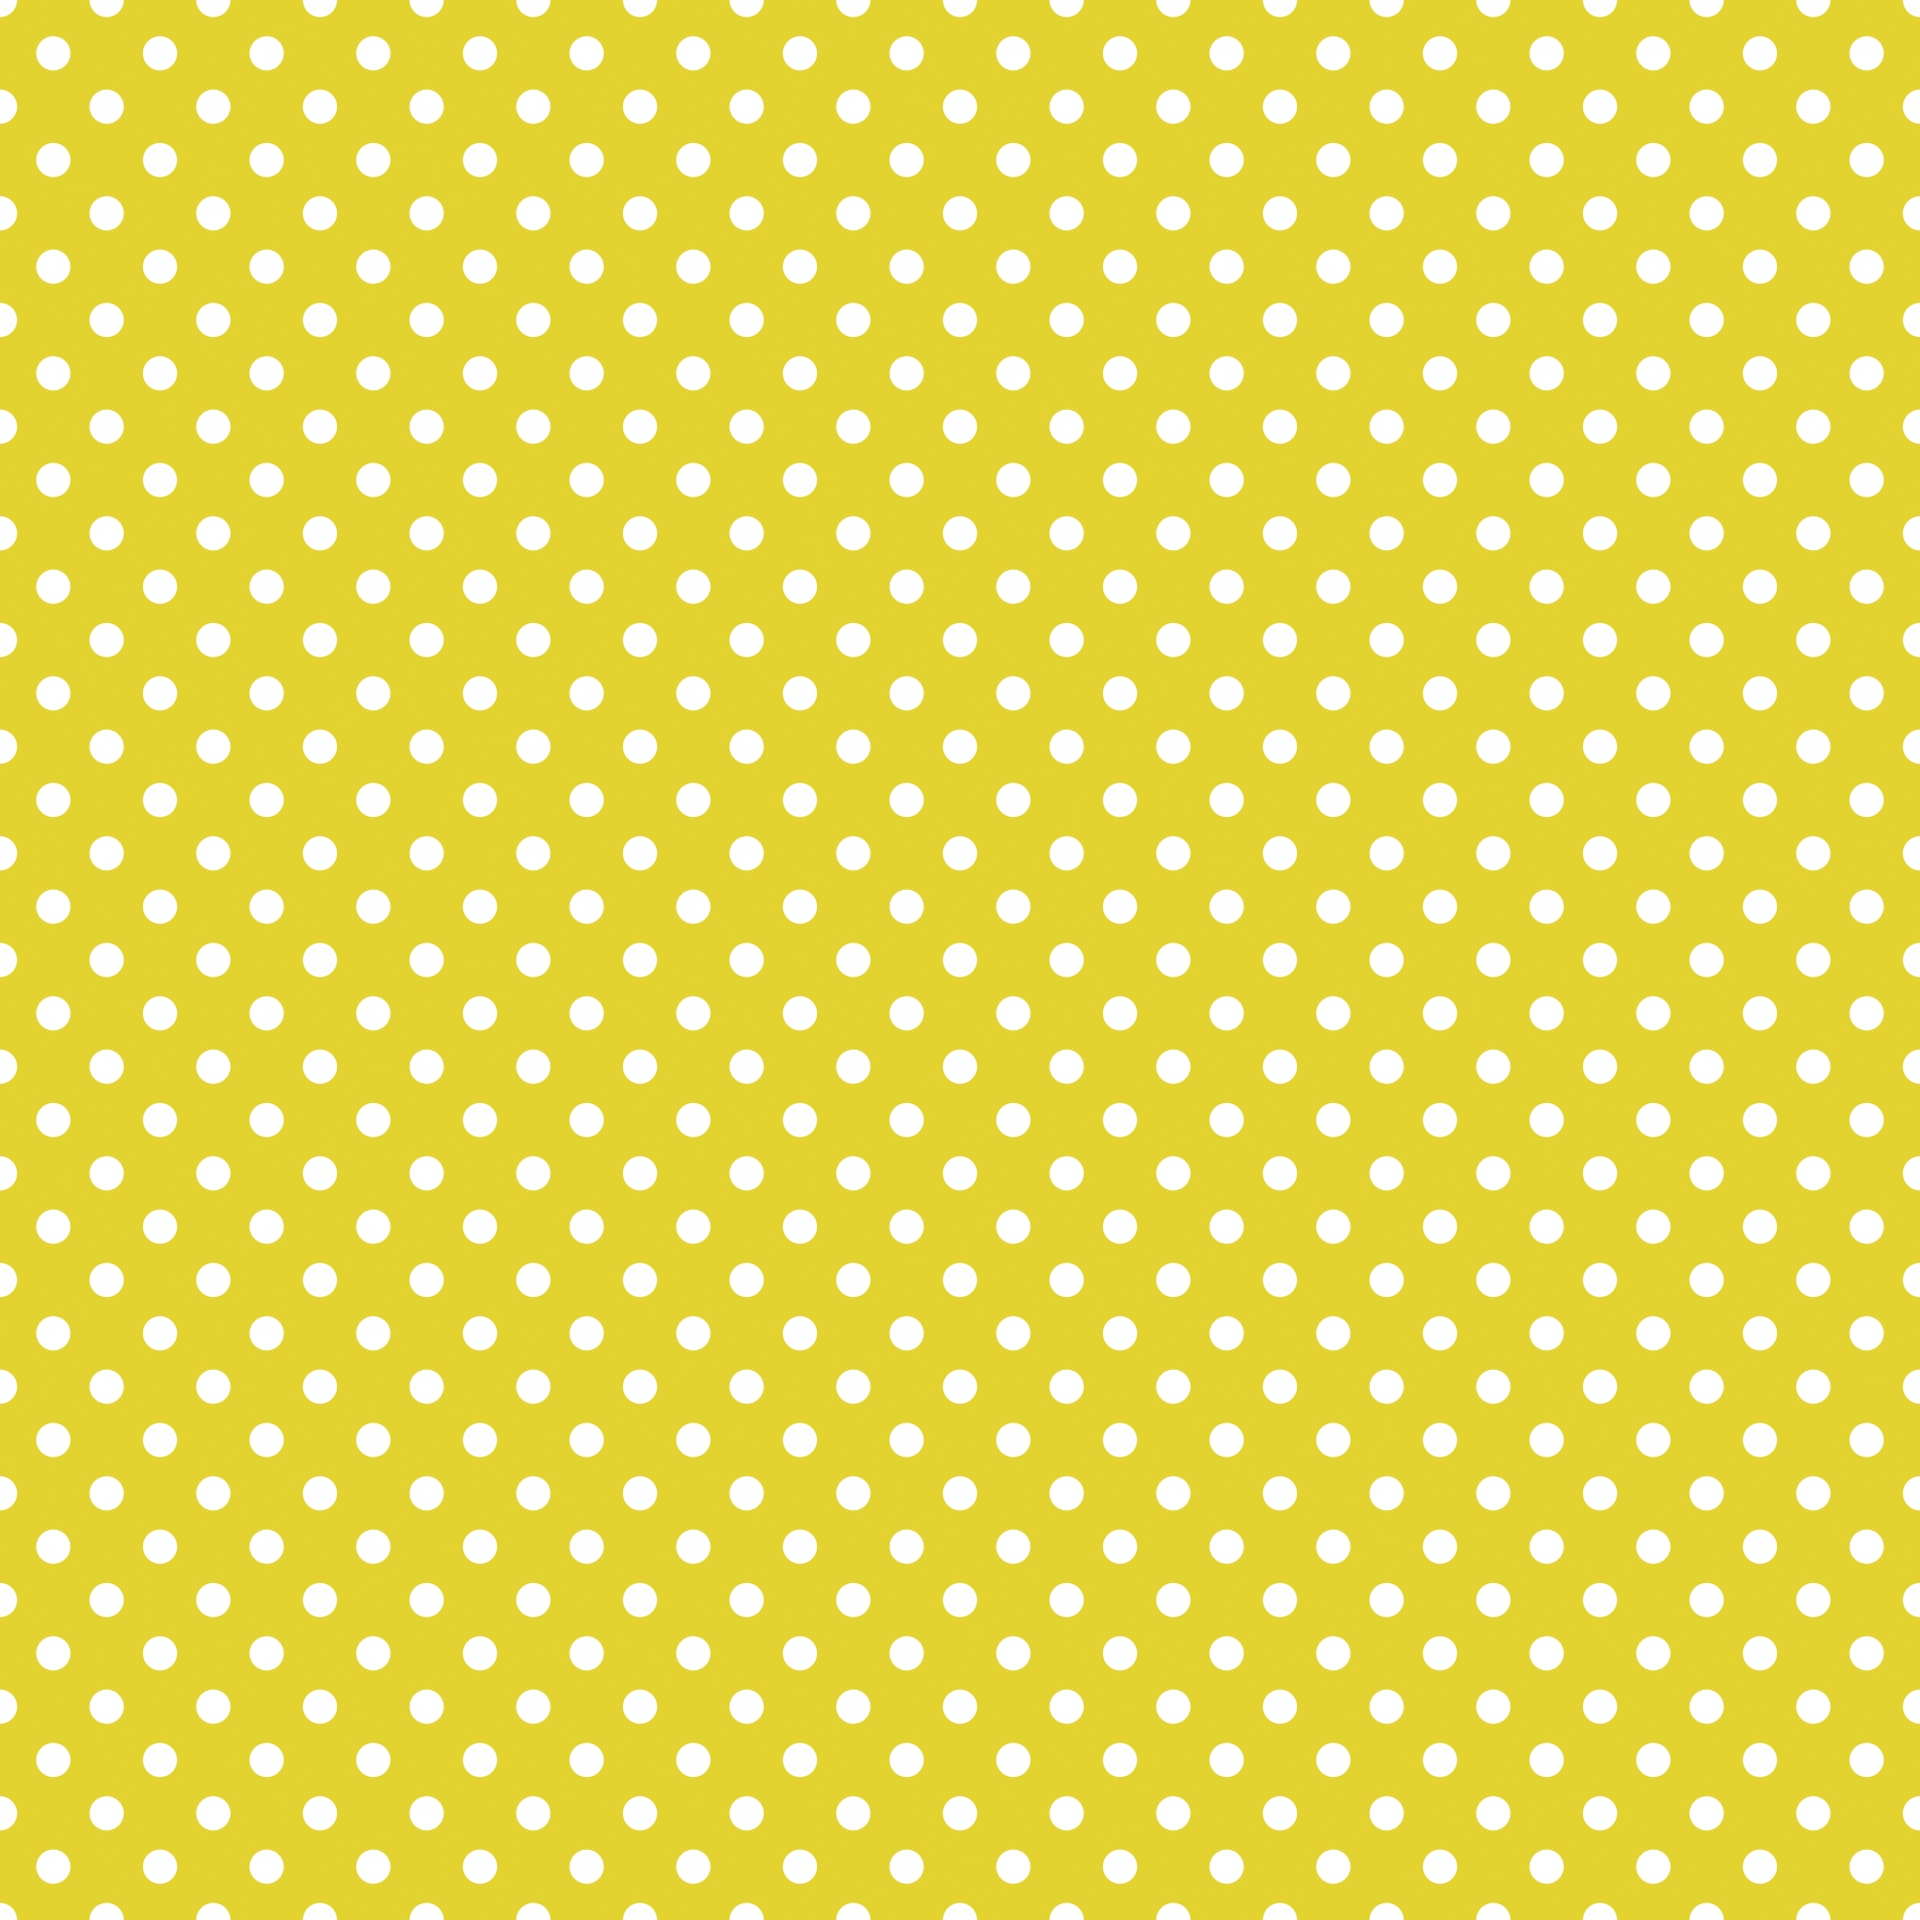 polka dots pattern polka free photo